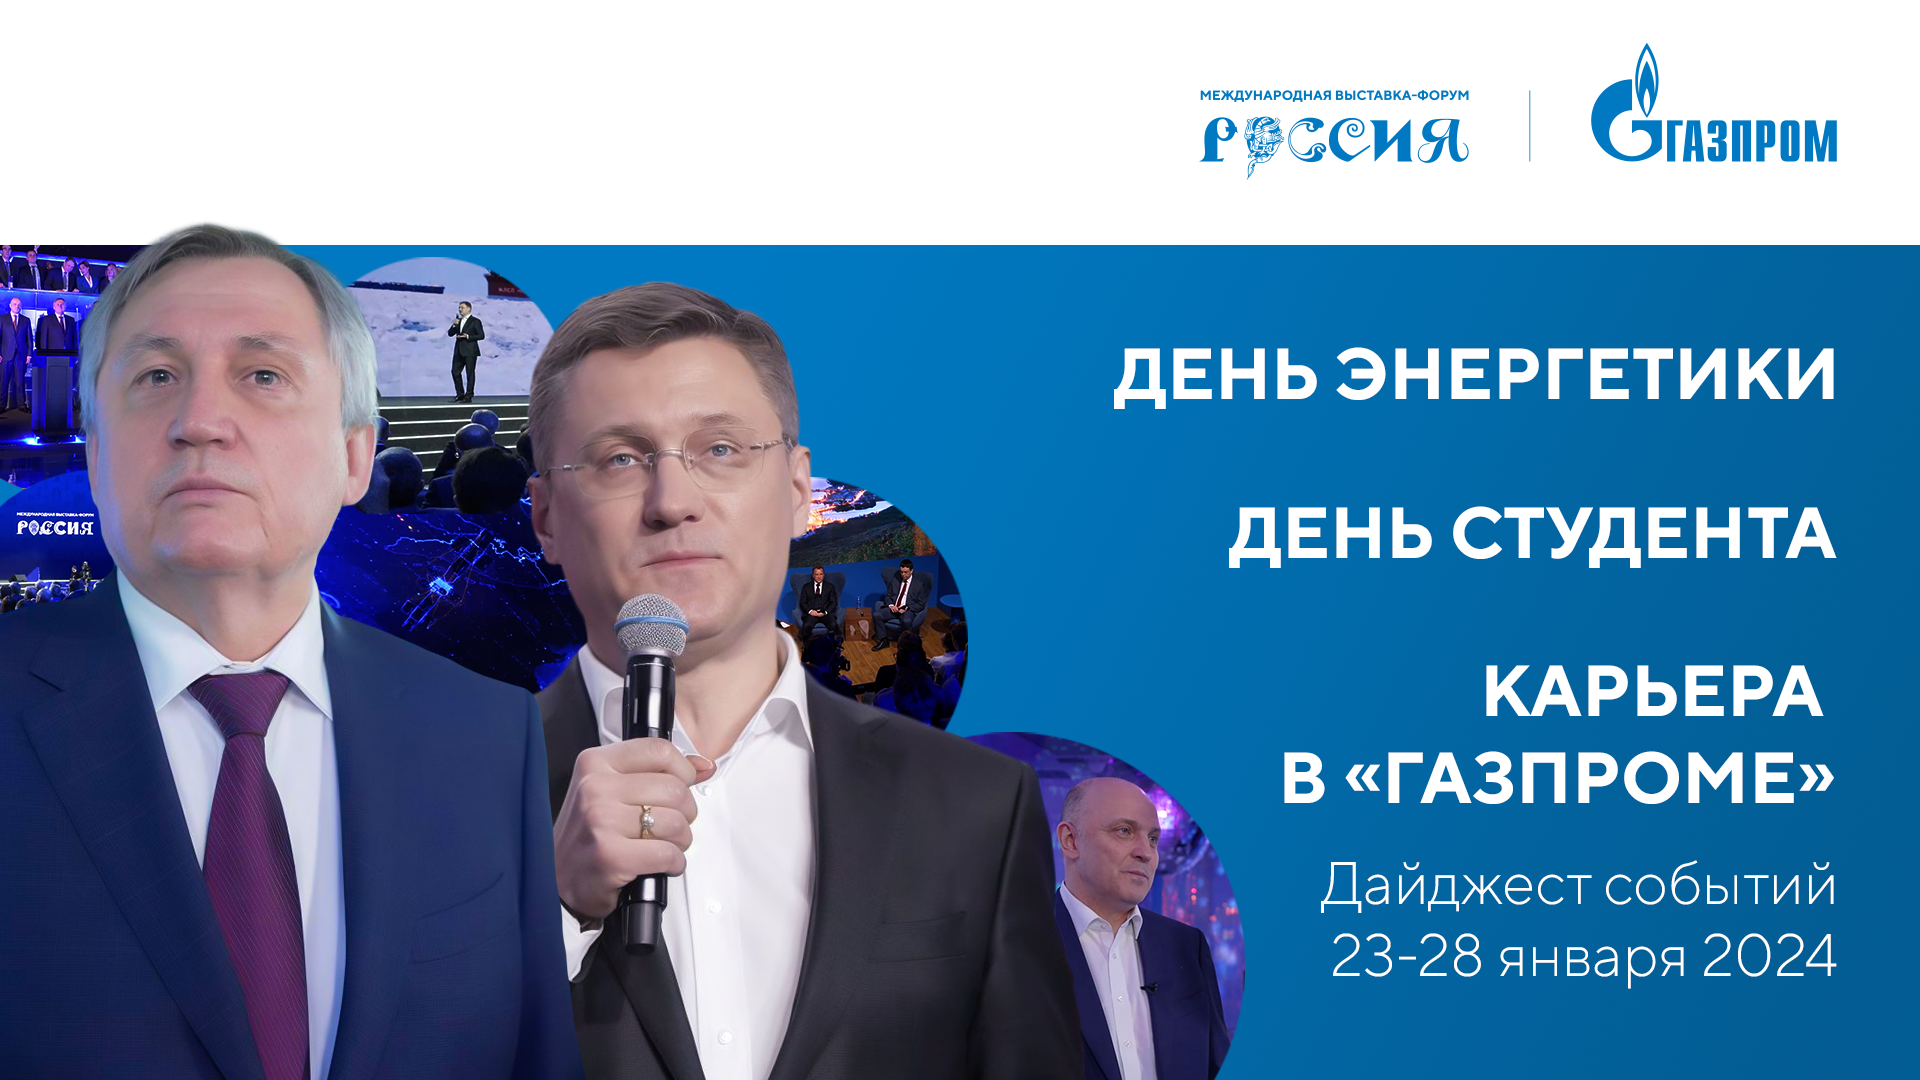 Павильон «Газпром» | Дайджест 23-28 января